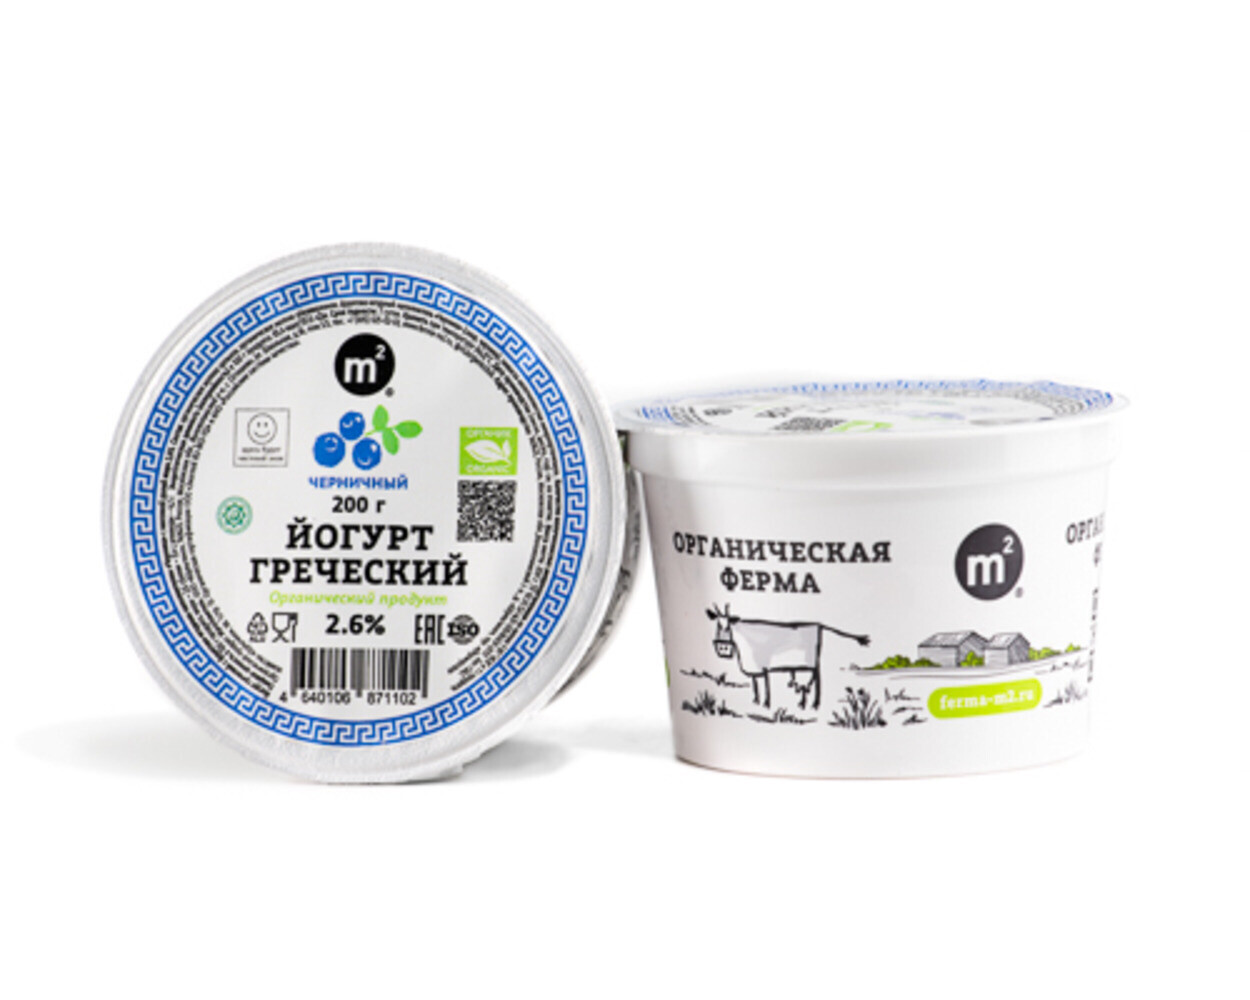 Йогурт греческий 2,6% «Черника» Ферма М2